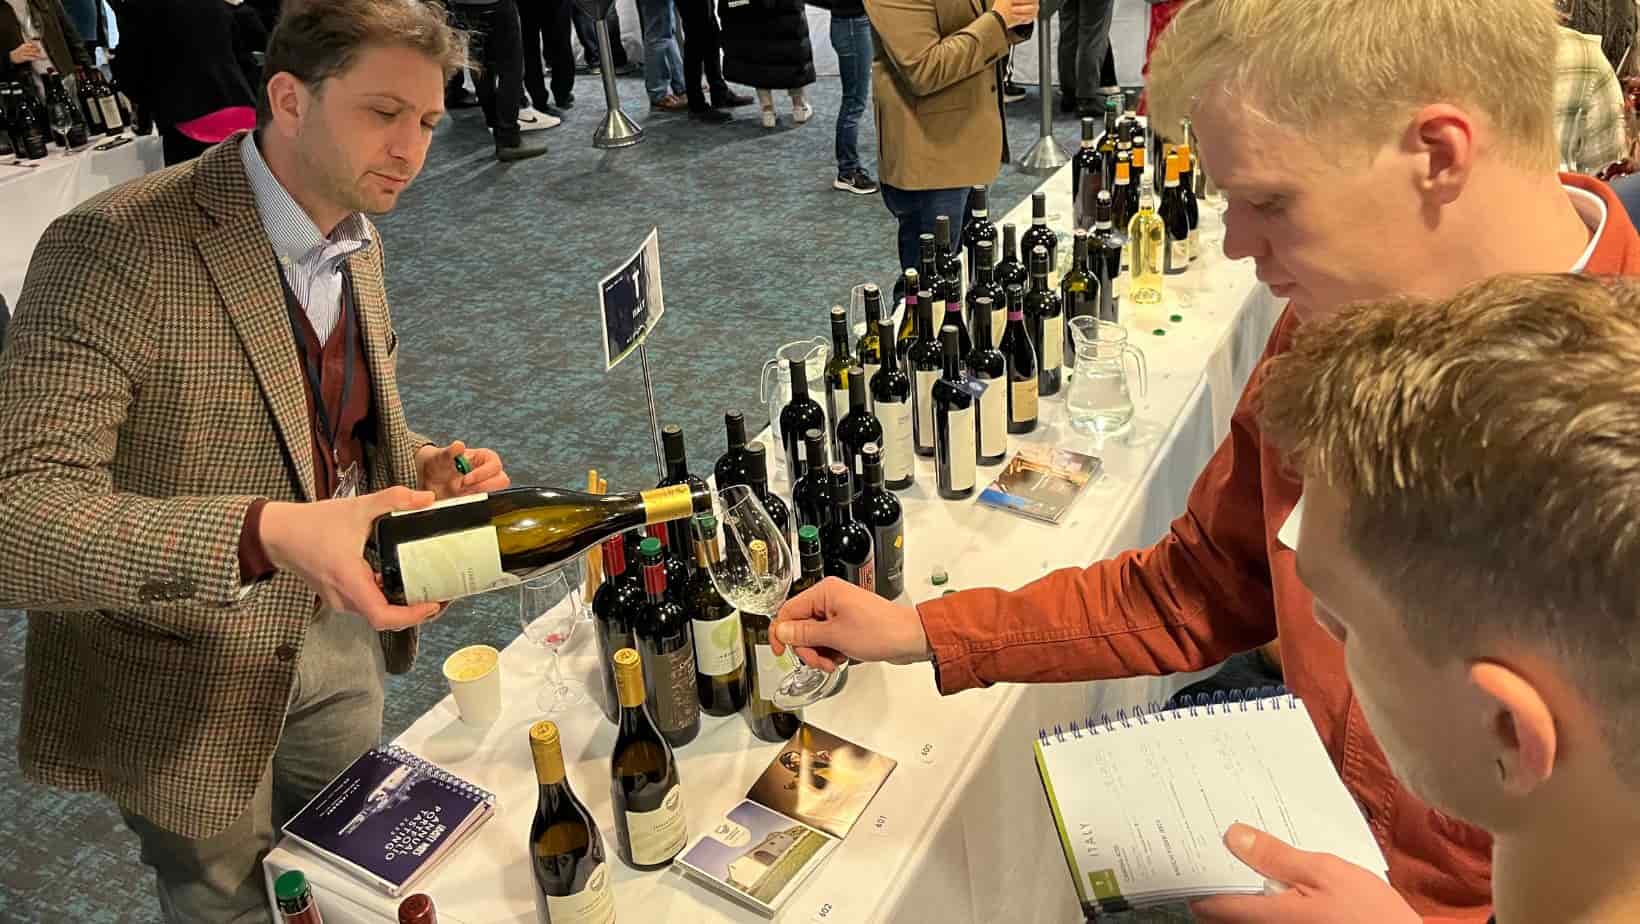 The selection of Antonella Corda wines presented at the Portfolio tasting.